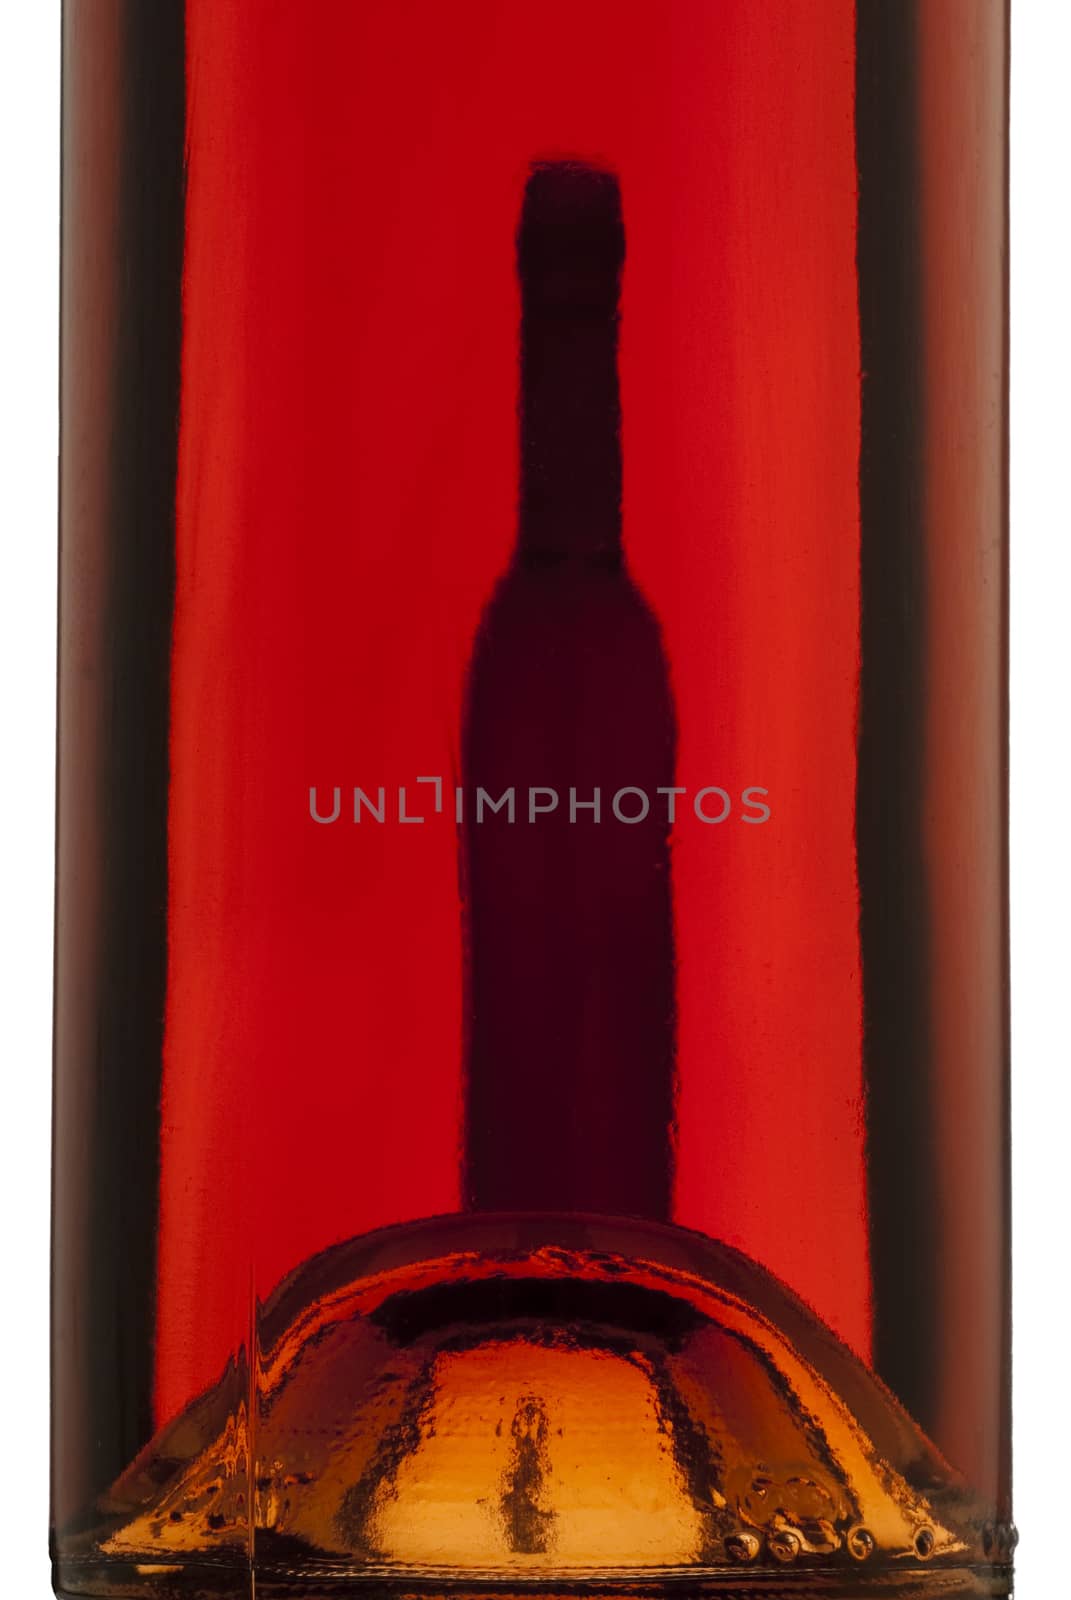 Wine bottle, backlight, white background, rose wine by jalonsohu@gmail.com